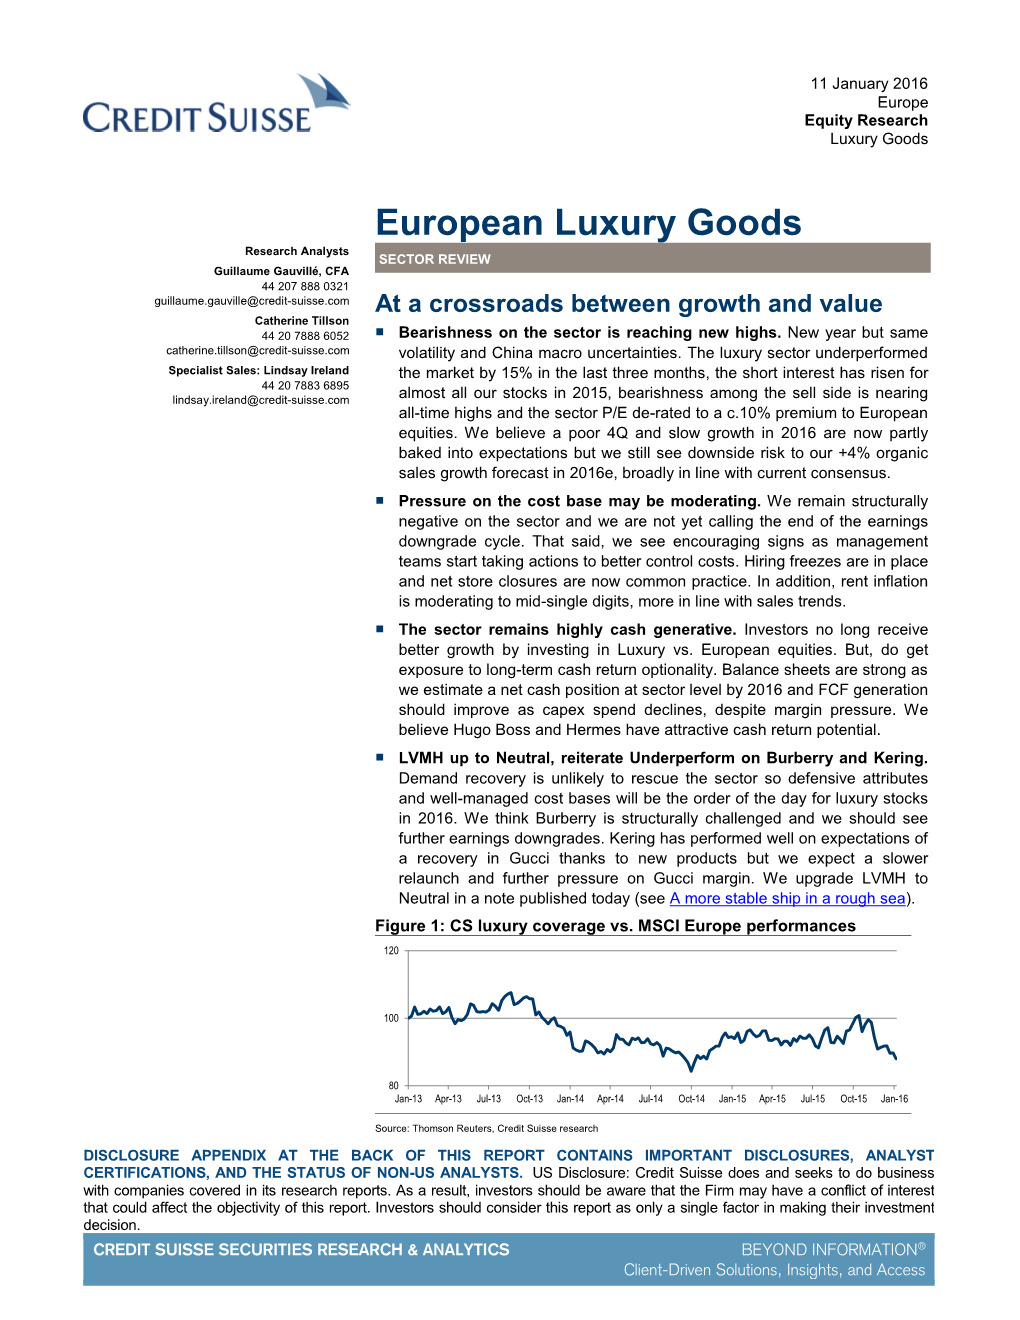 European Luxury Goods